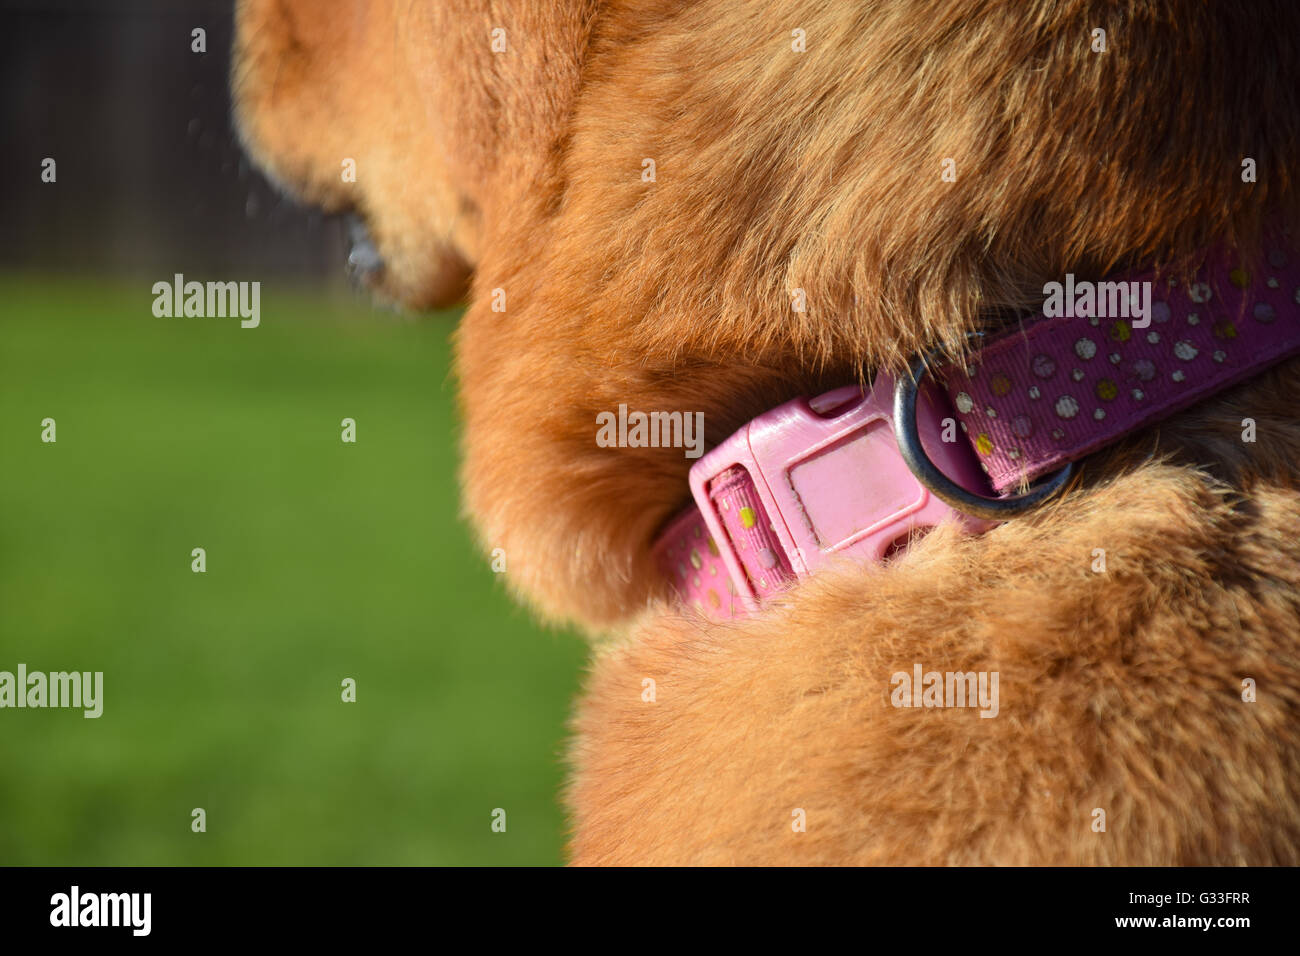 Closeup of a furry orange dog wearing a pink collar Stock Photo